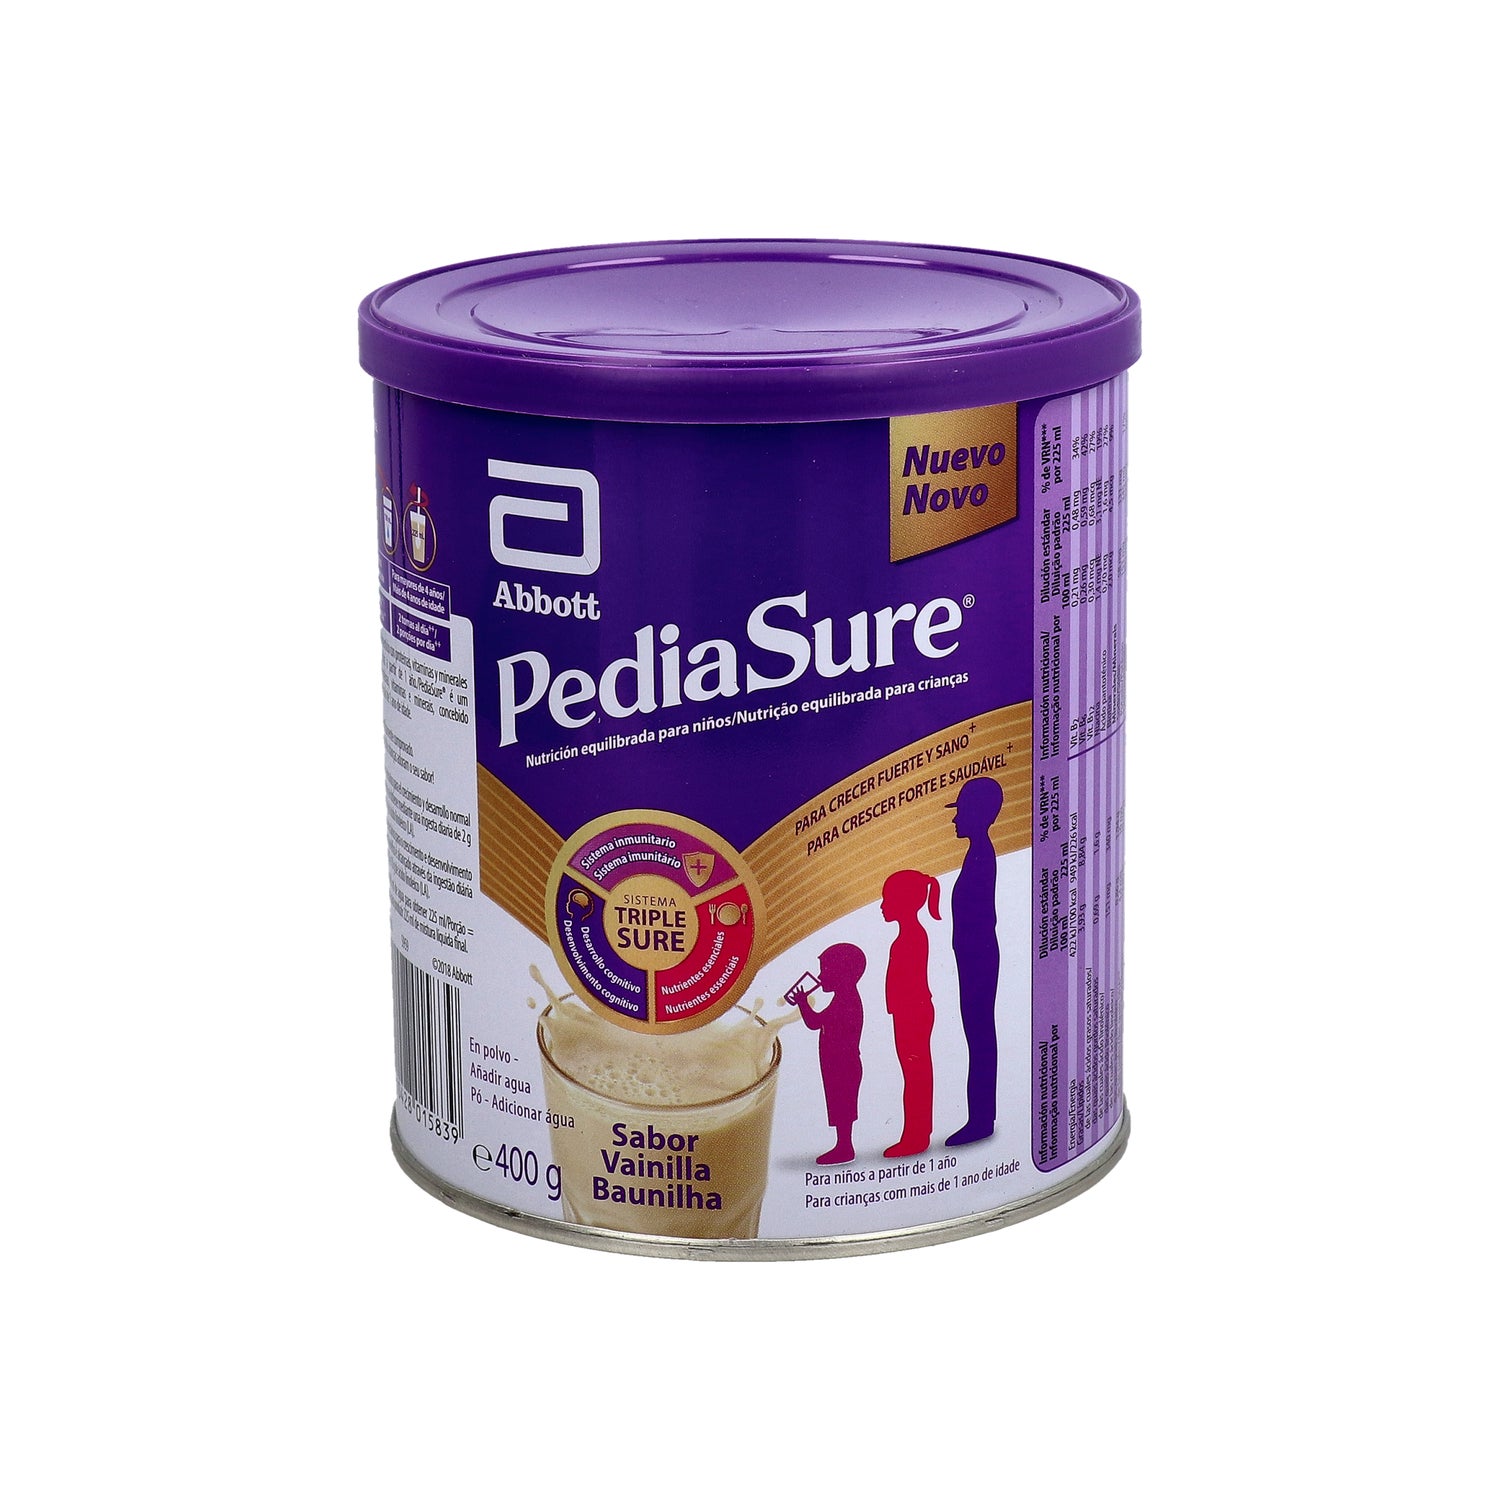 PediaSure vainilla 400 g, Nutrición Infantil